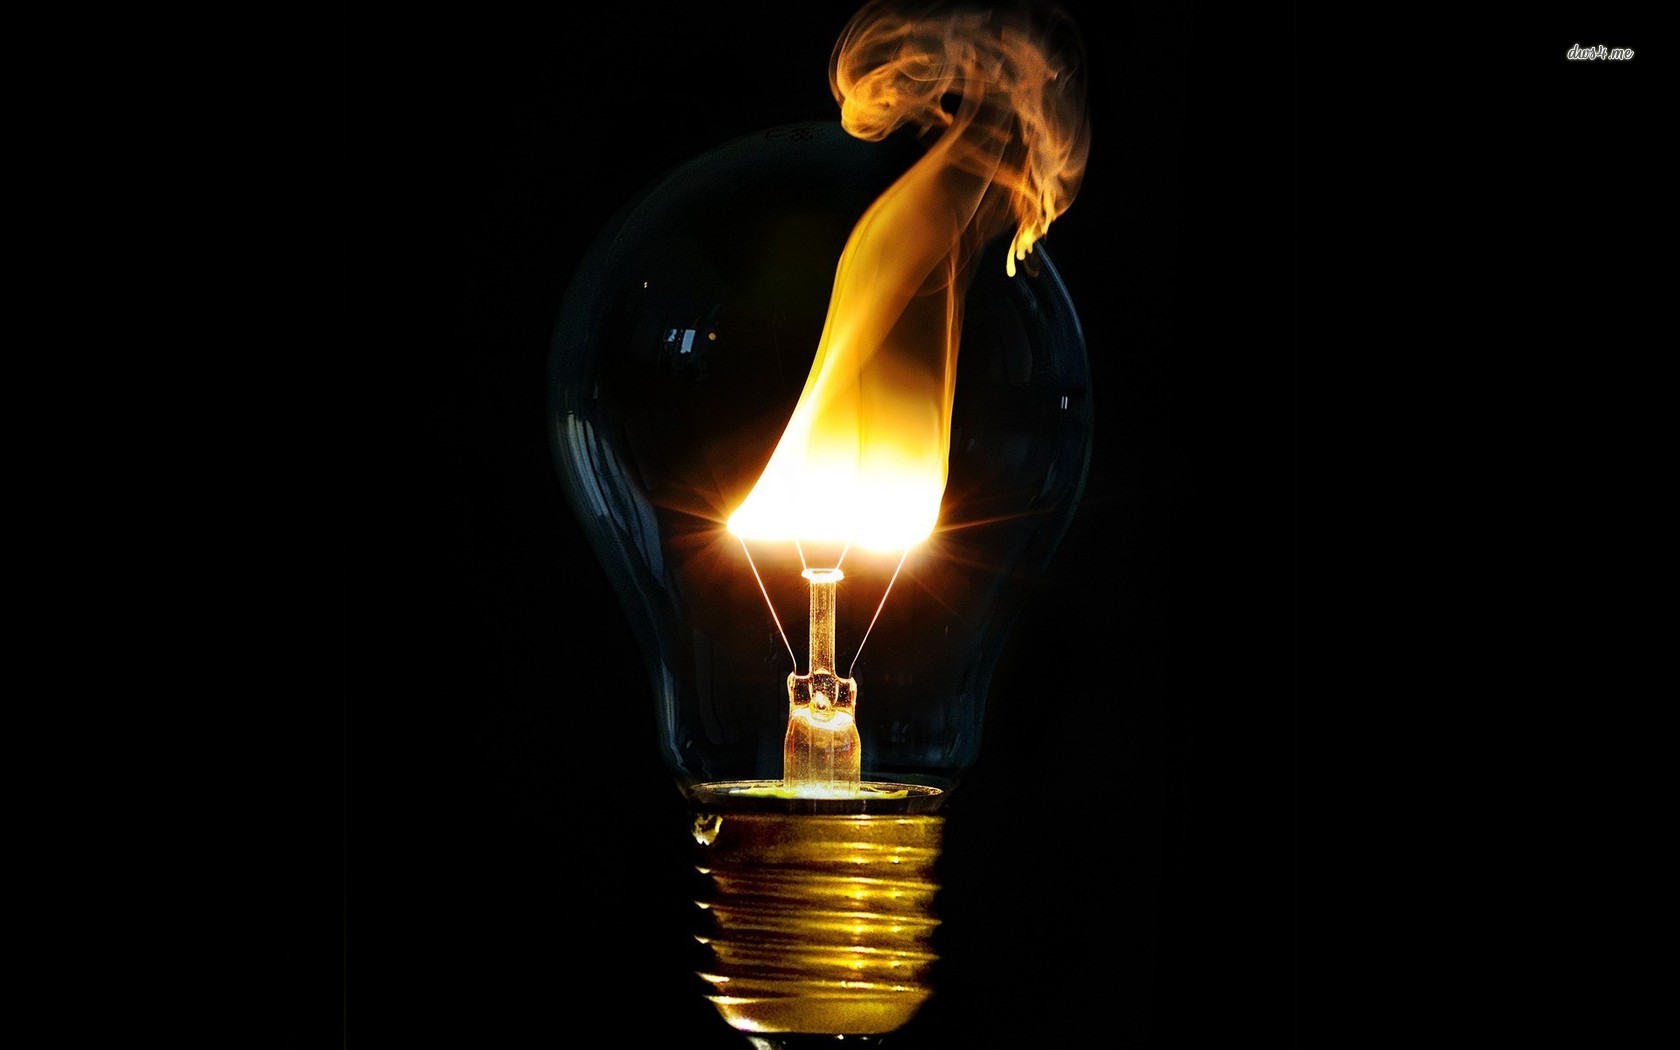 15588-flaming-light-bulb-1680x1050-digital-art-wallpaper.jpg